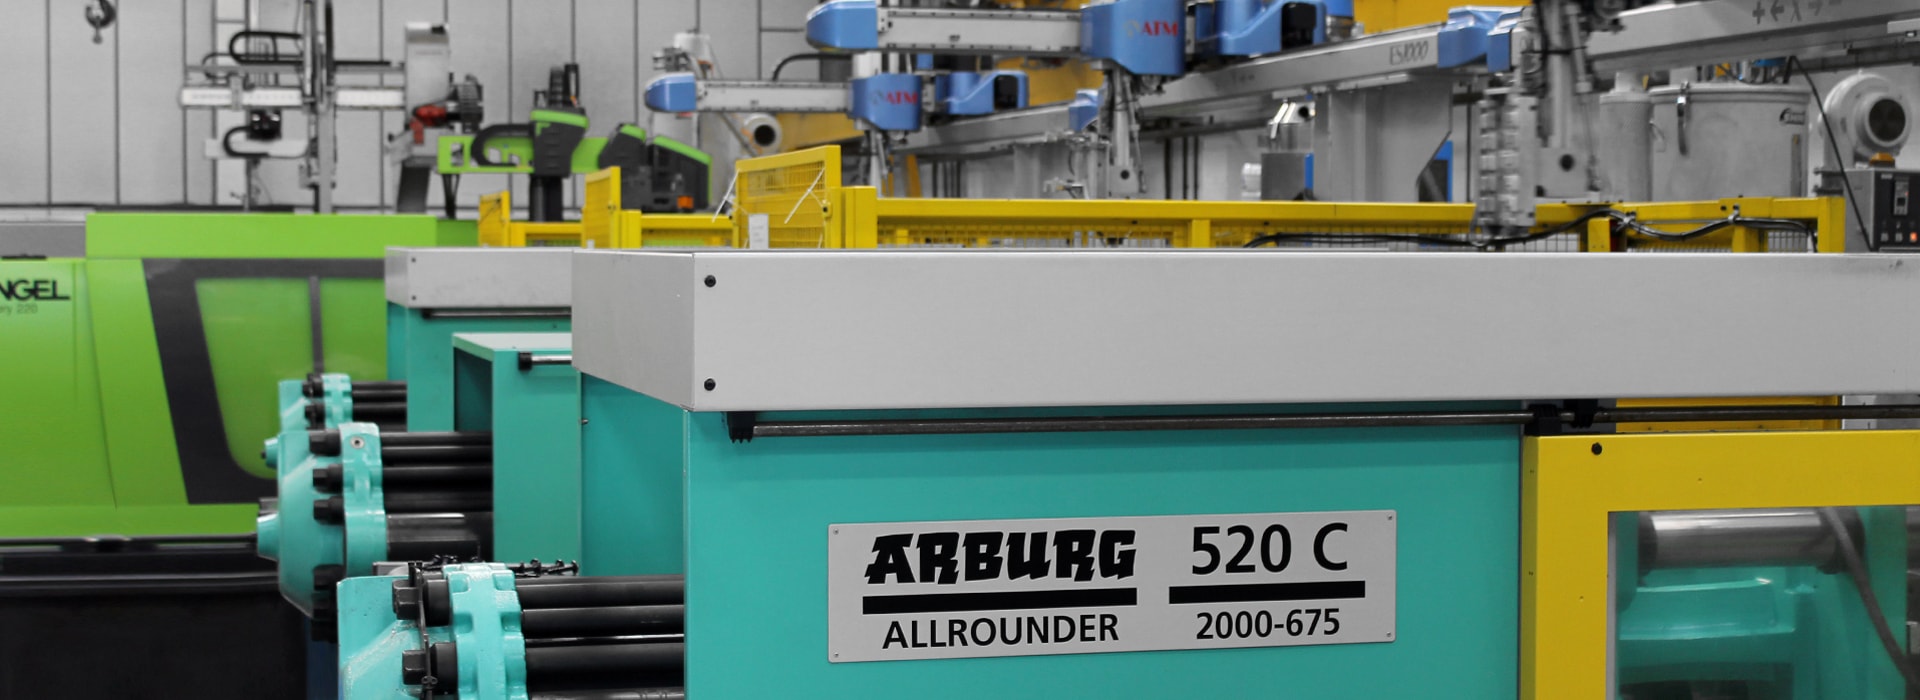 Arburg injection moulding machine